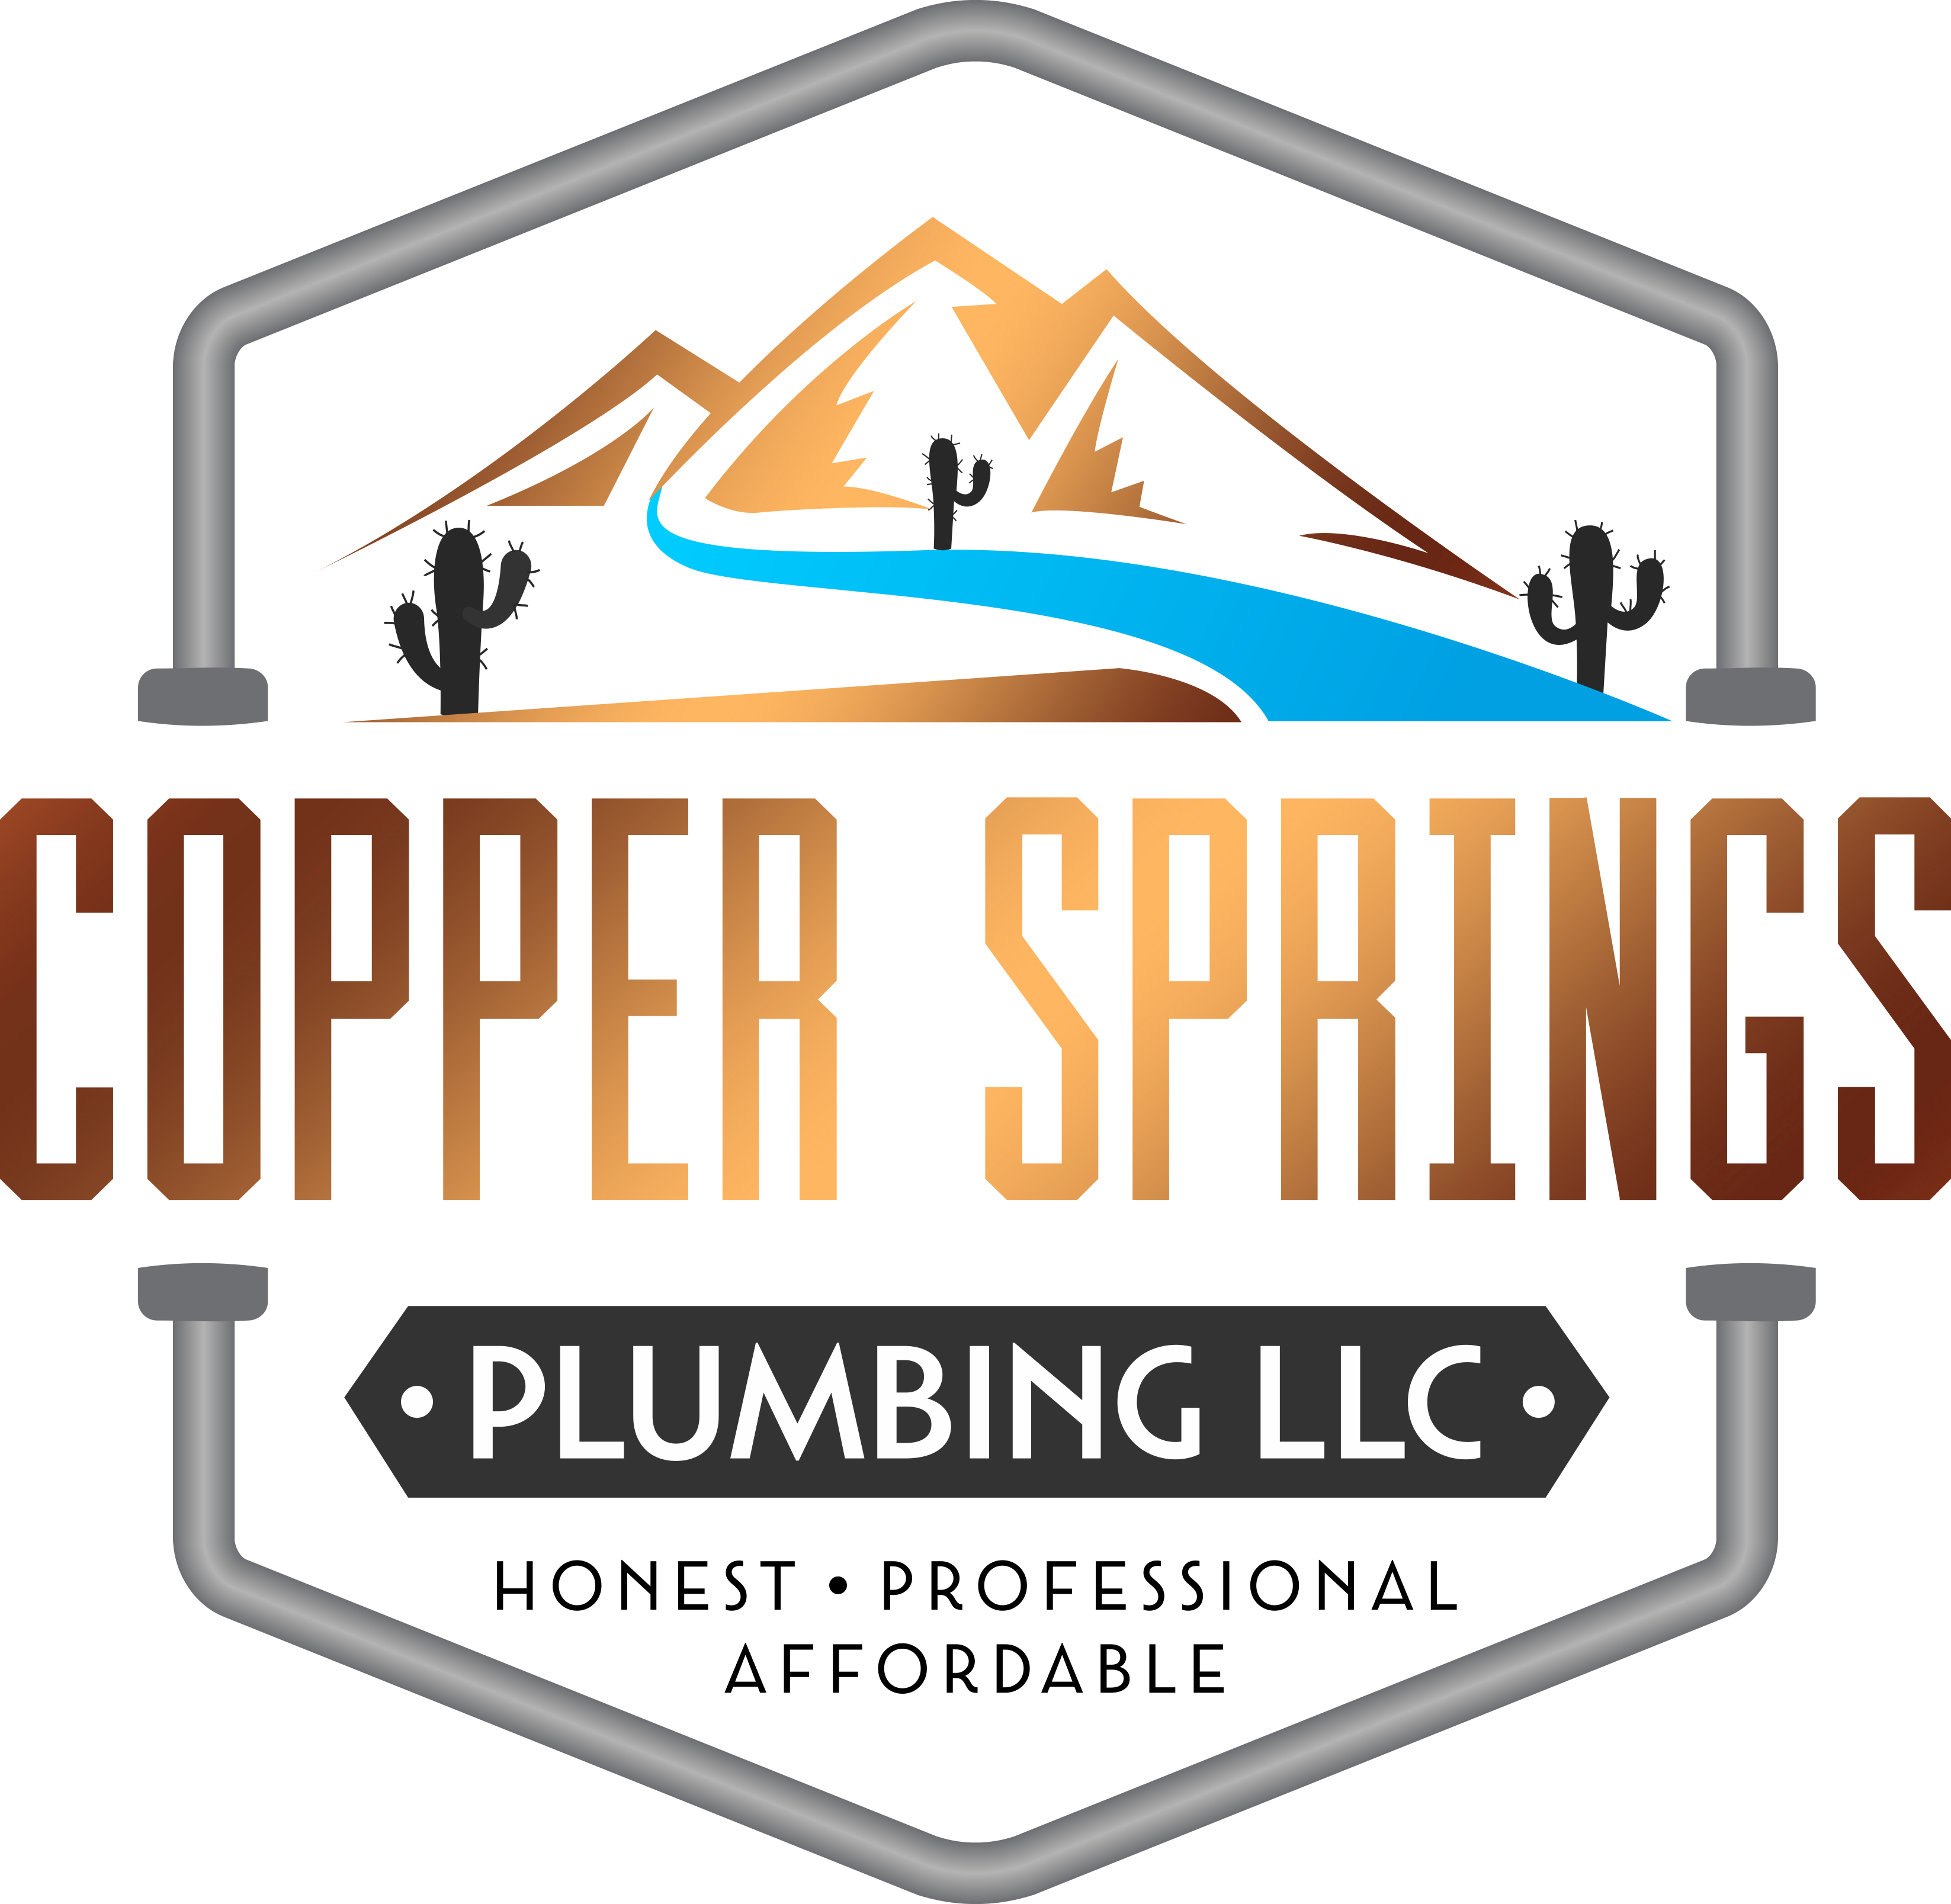 Copper Springs Plumbing